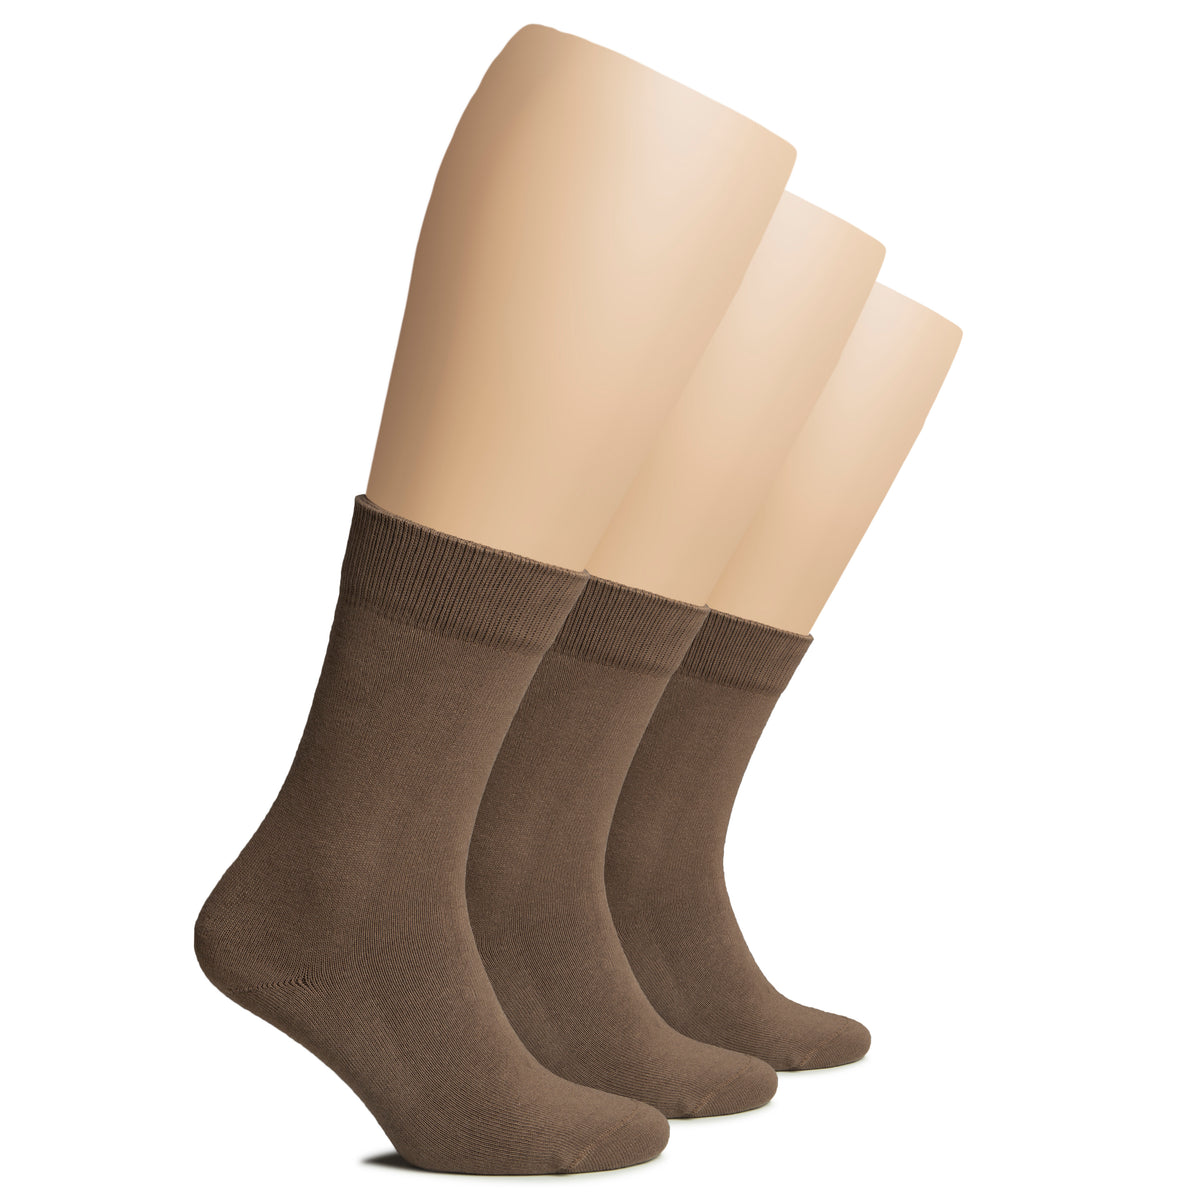 Hugh Ugoli Women Cotton Warm Winter Socks Crew with Seamless Toe, 3 Pairs | Shoe Size: 6-9 | Burgundy / Light Pink / Navy Blue